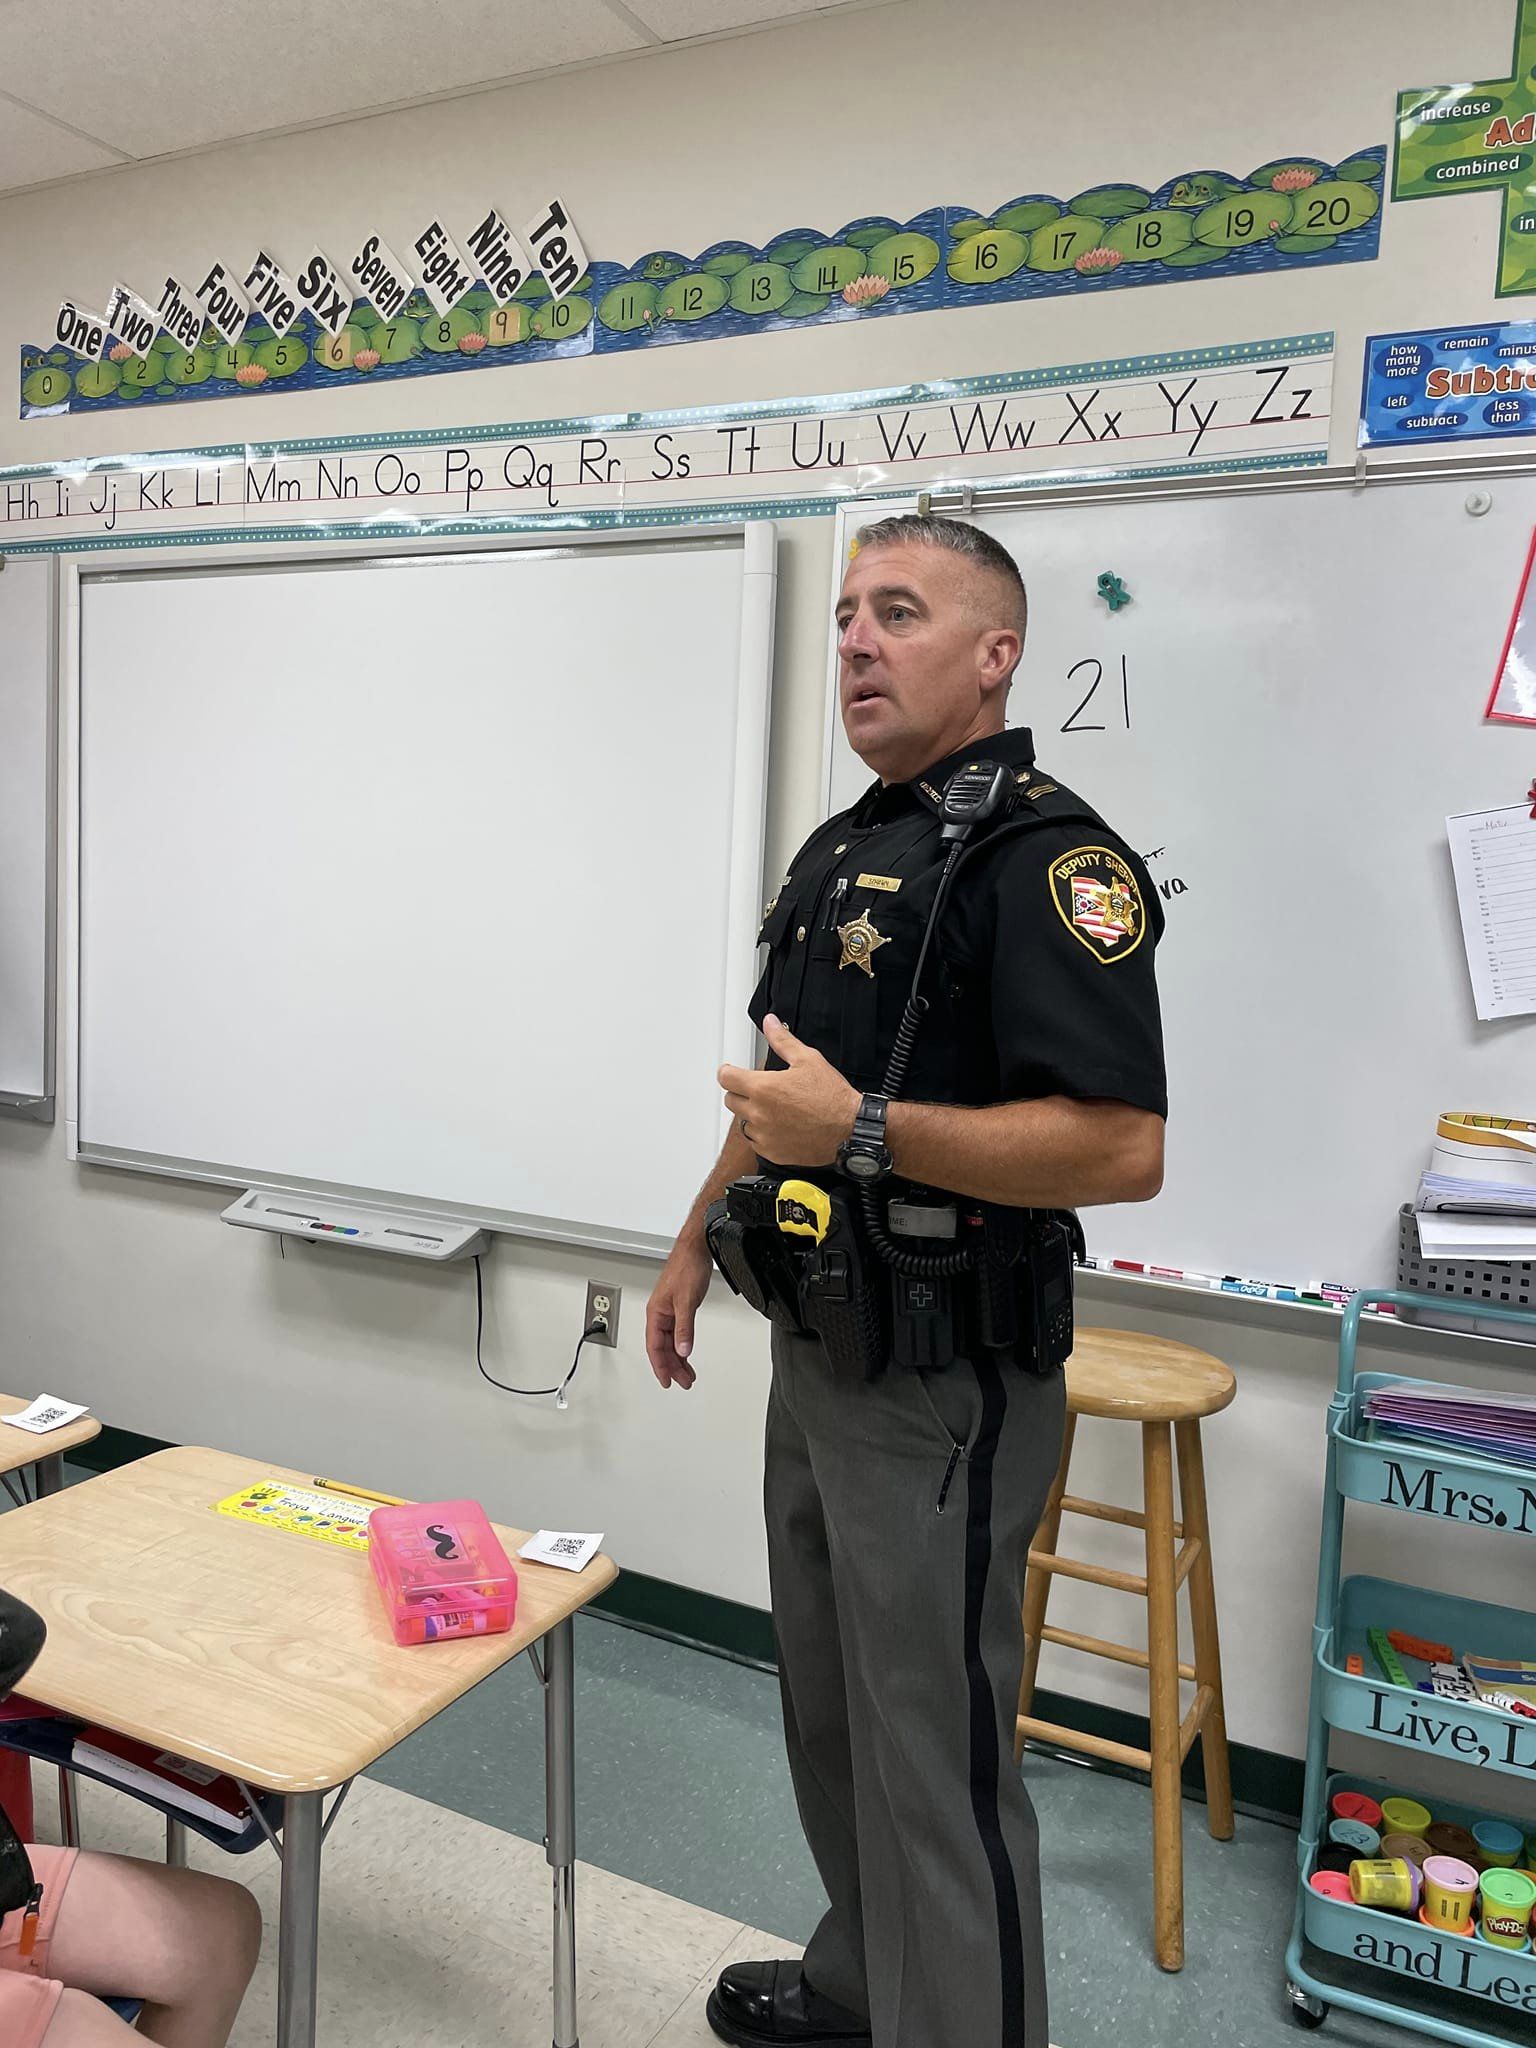 Sheriff speaking to kids